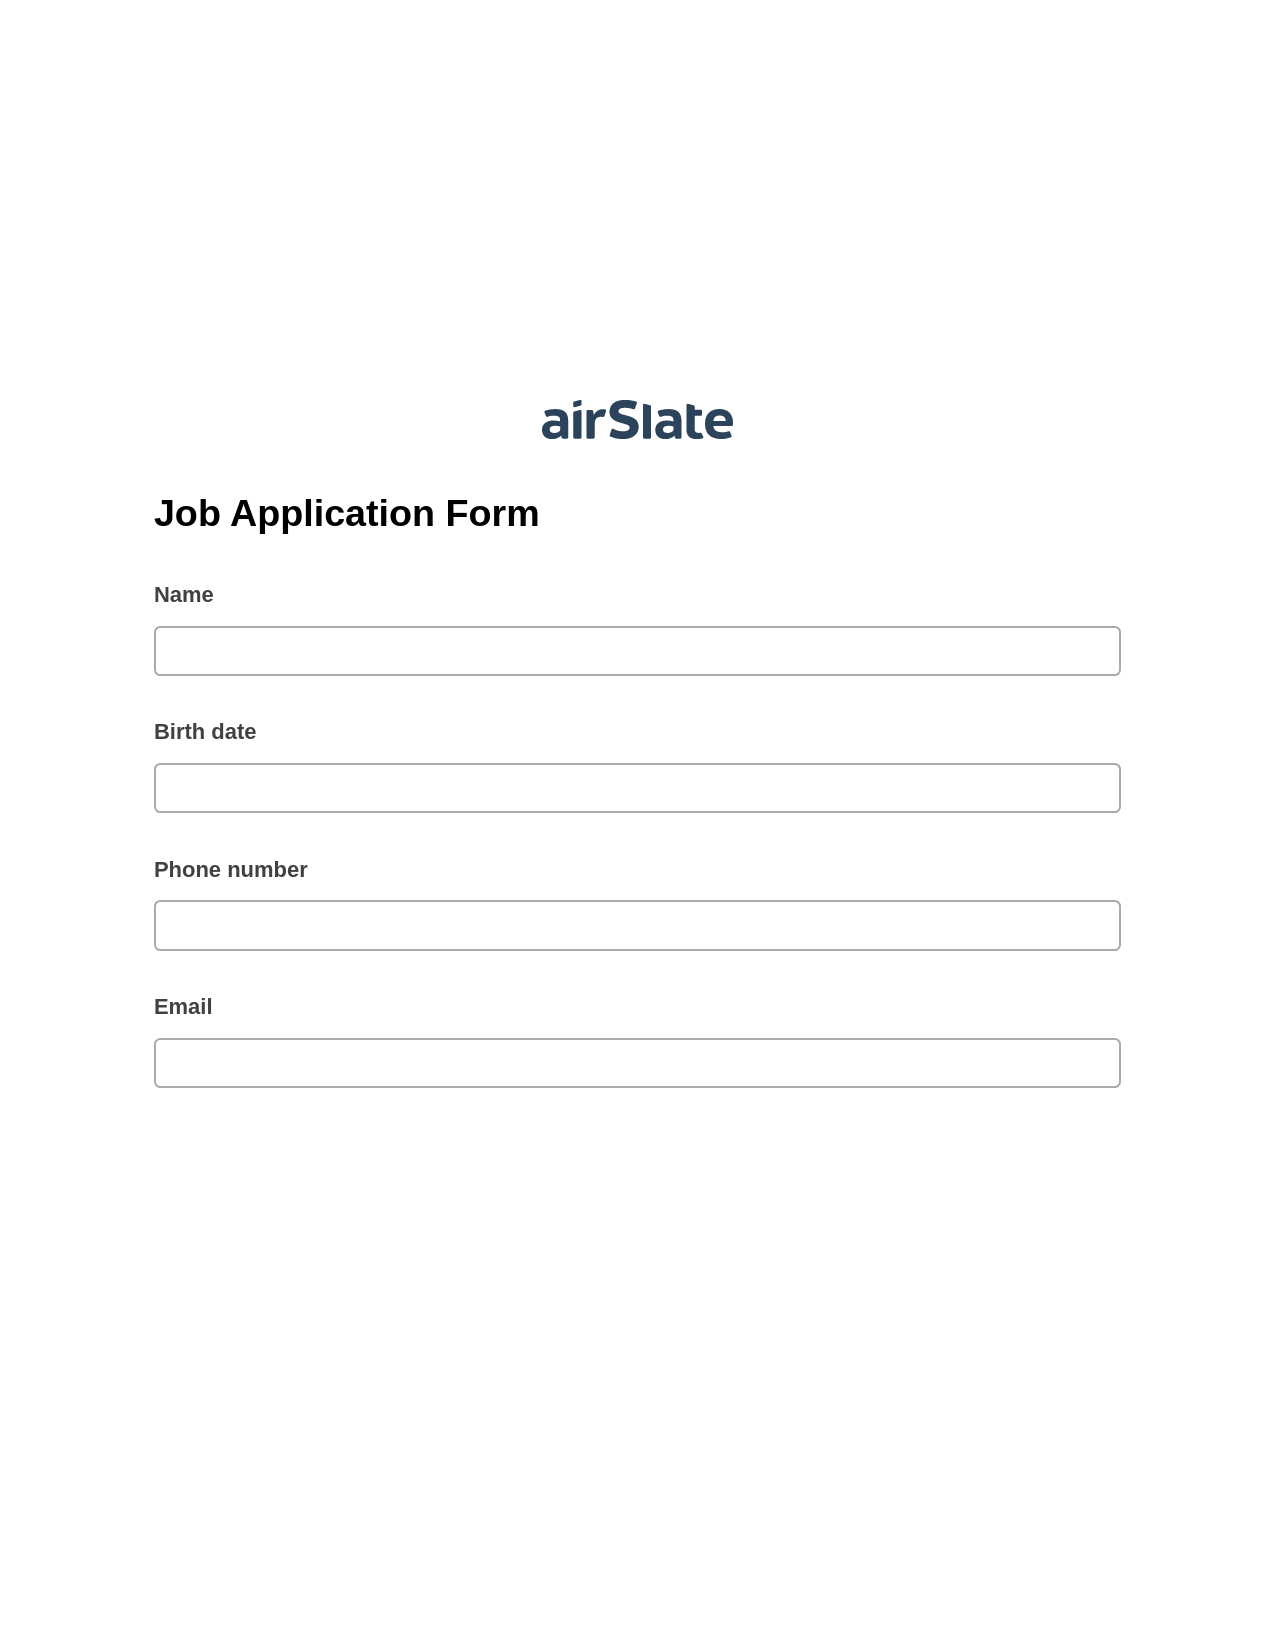 Multirole Job Application Form Pre-fill from CSV File Dropdown Options Bot, Create Slate Reminder Bot, Slack Notification Postfinish Bot